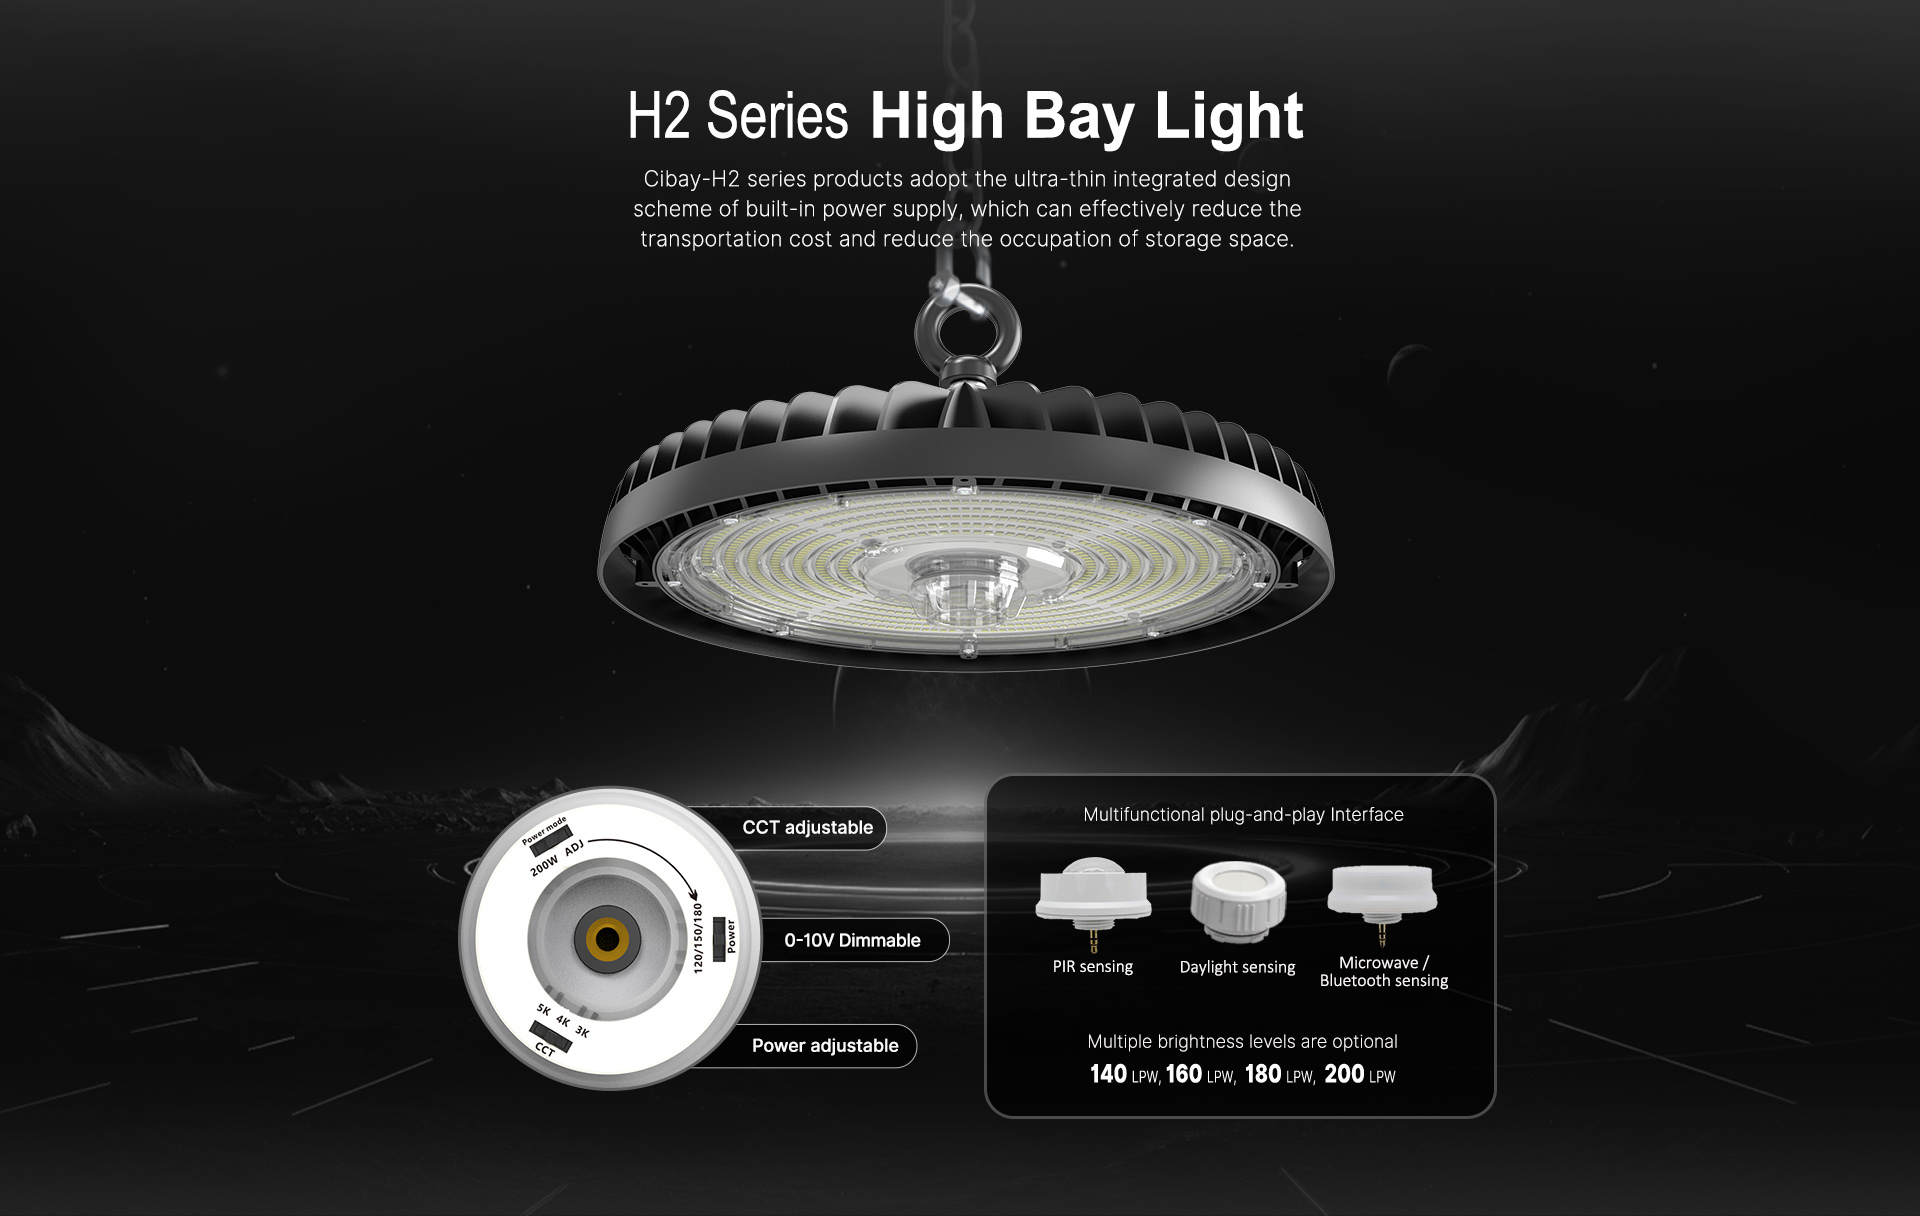 T2 Series High Bay Light